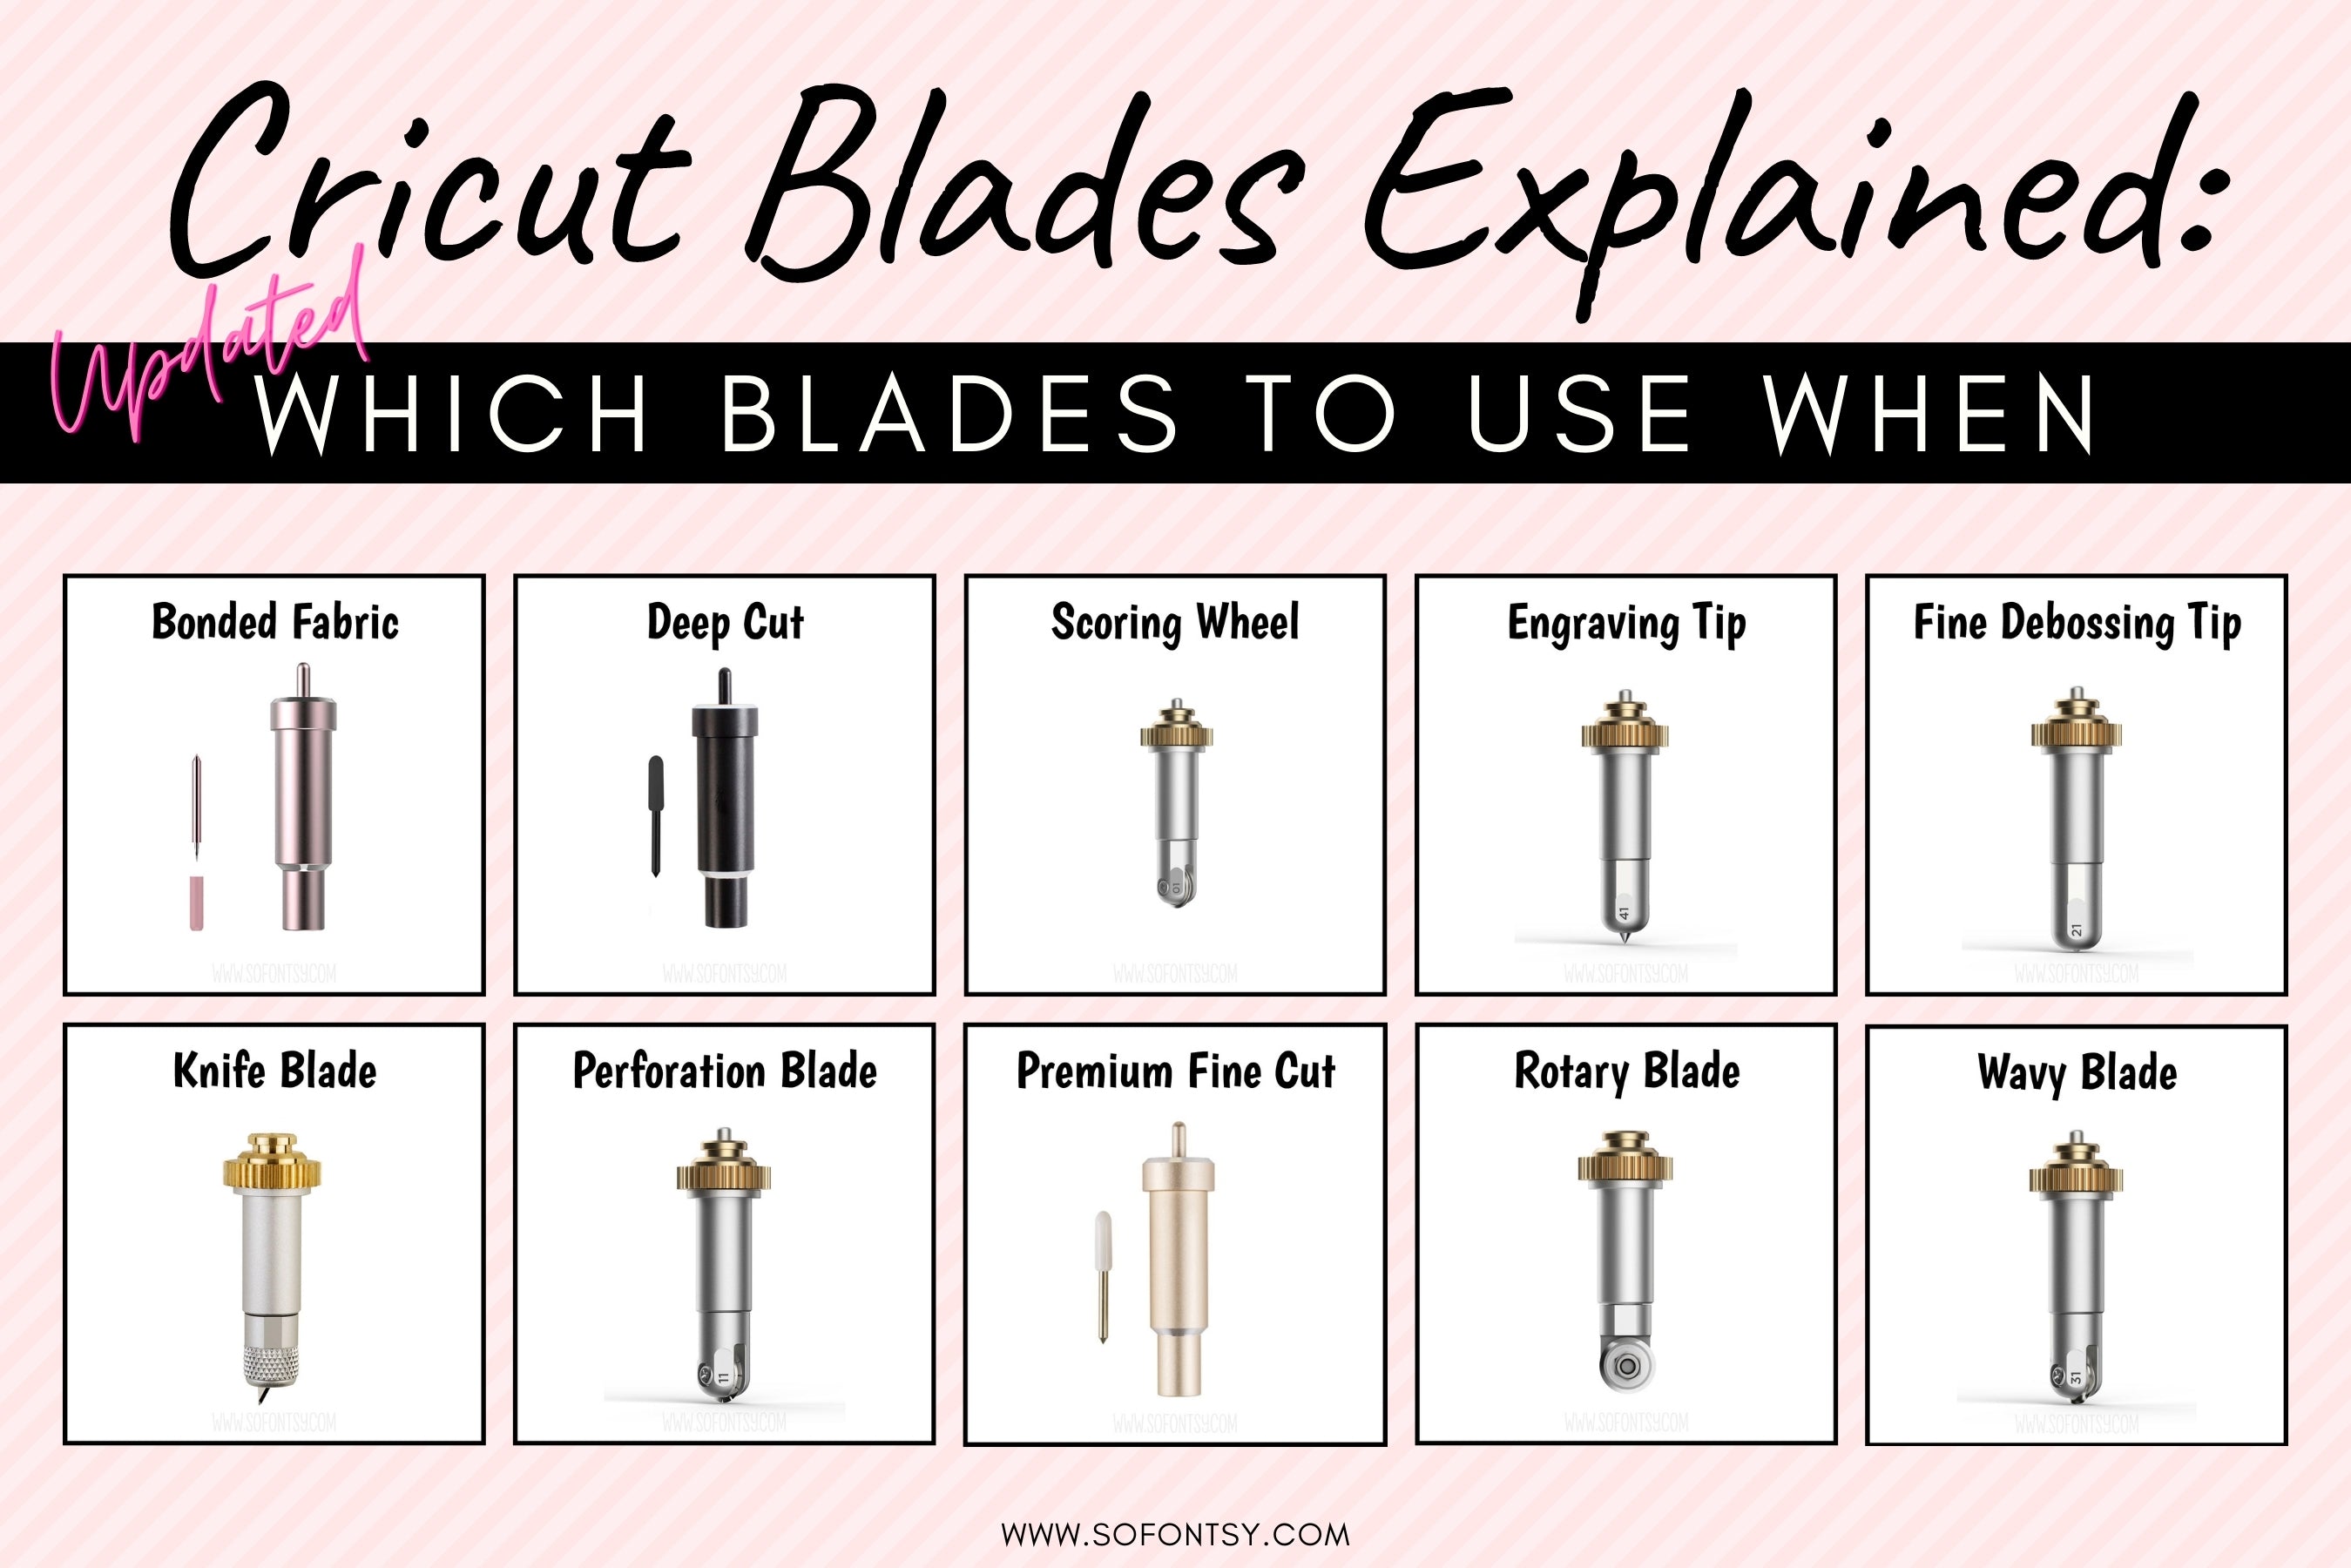 What Cricut blade cuts what?